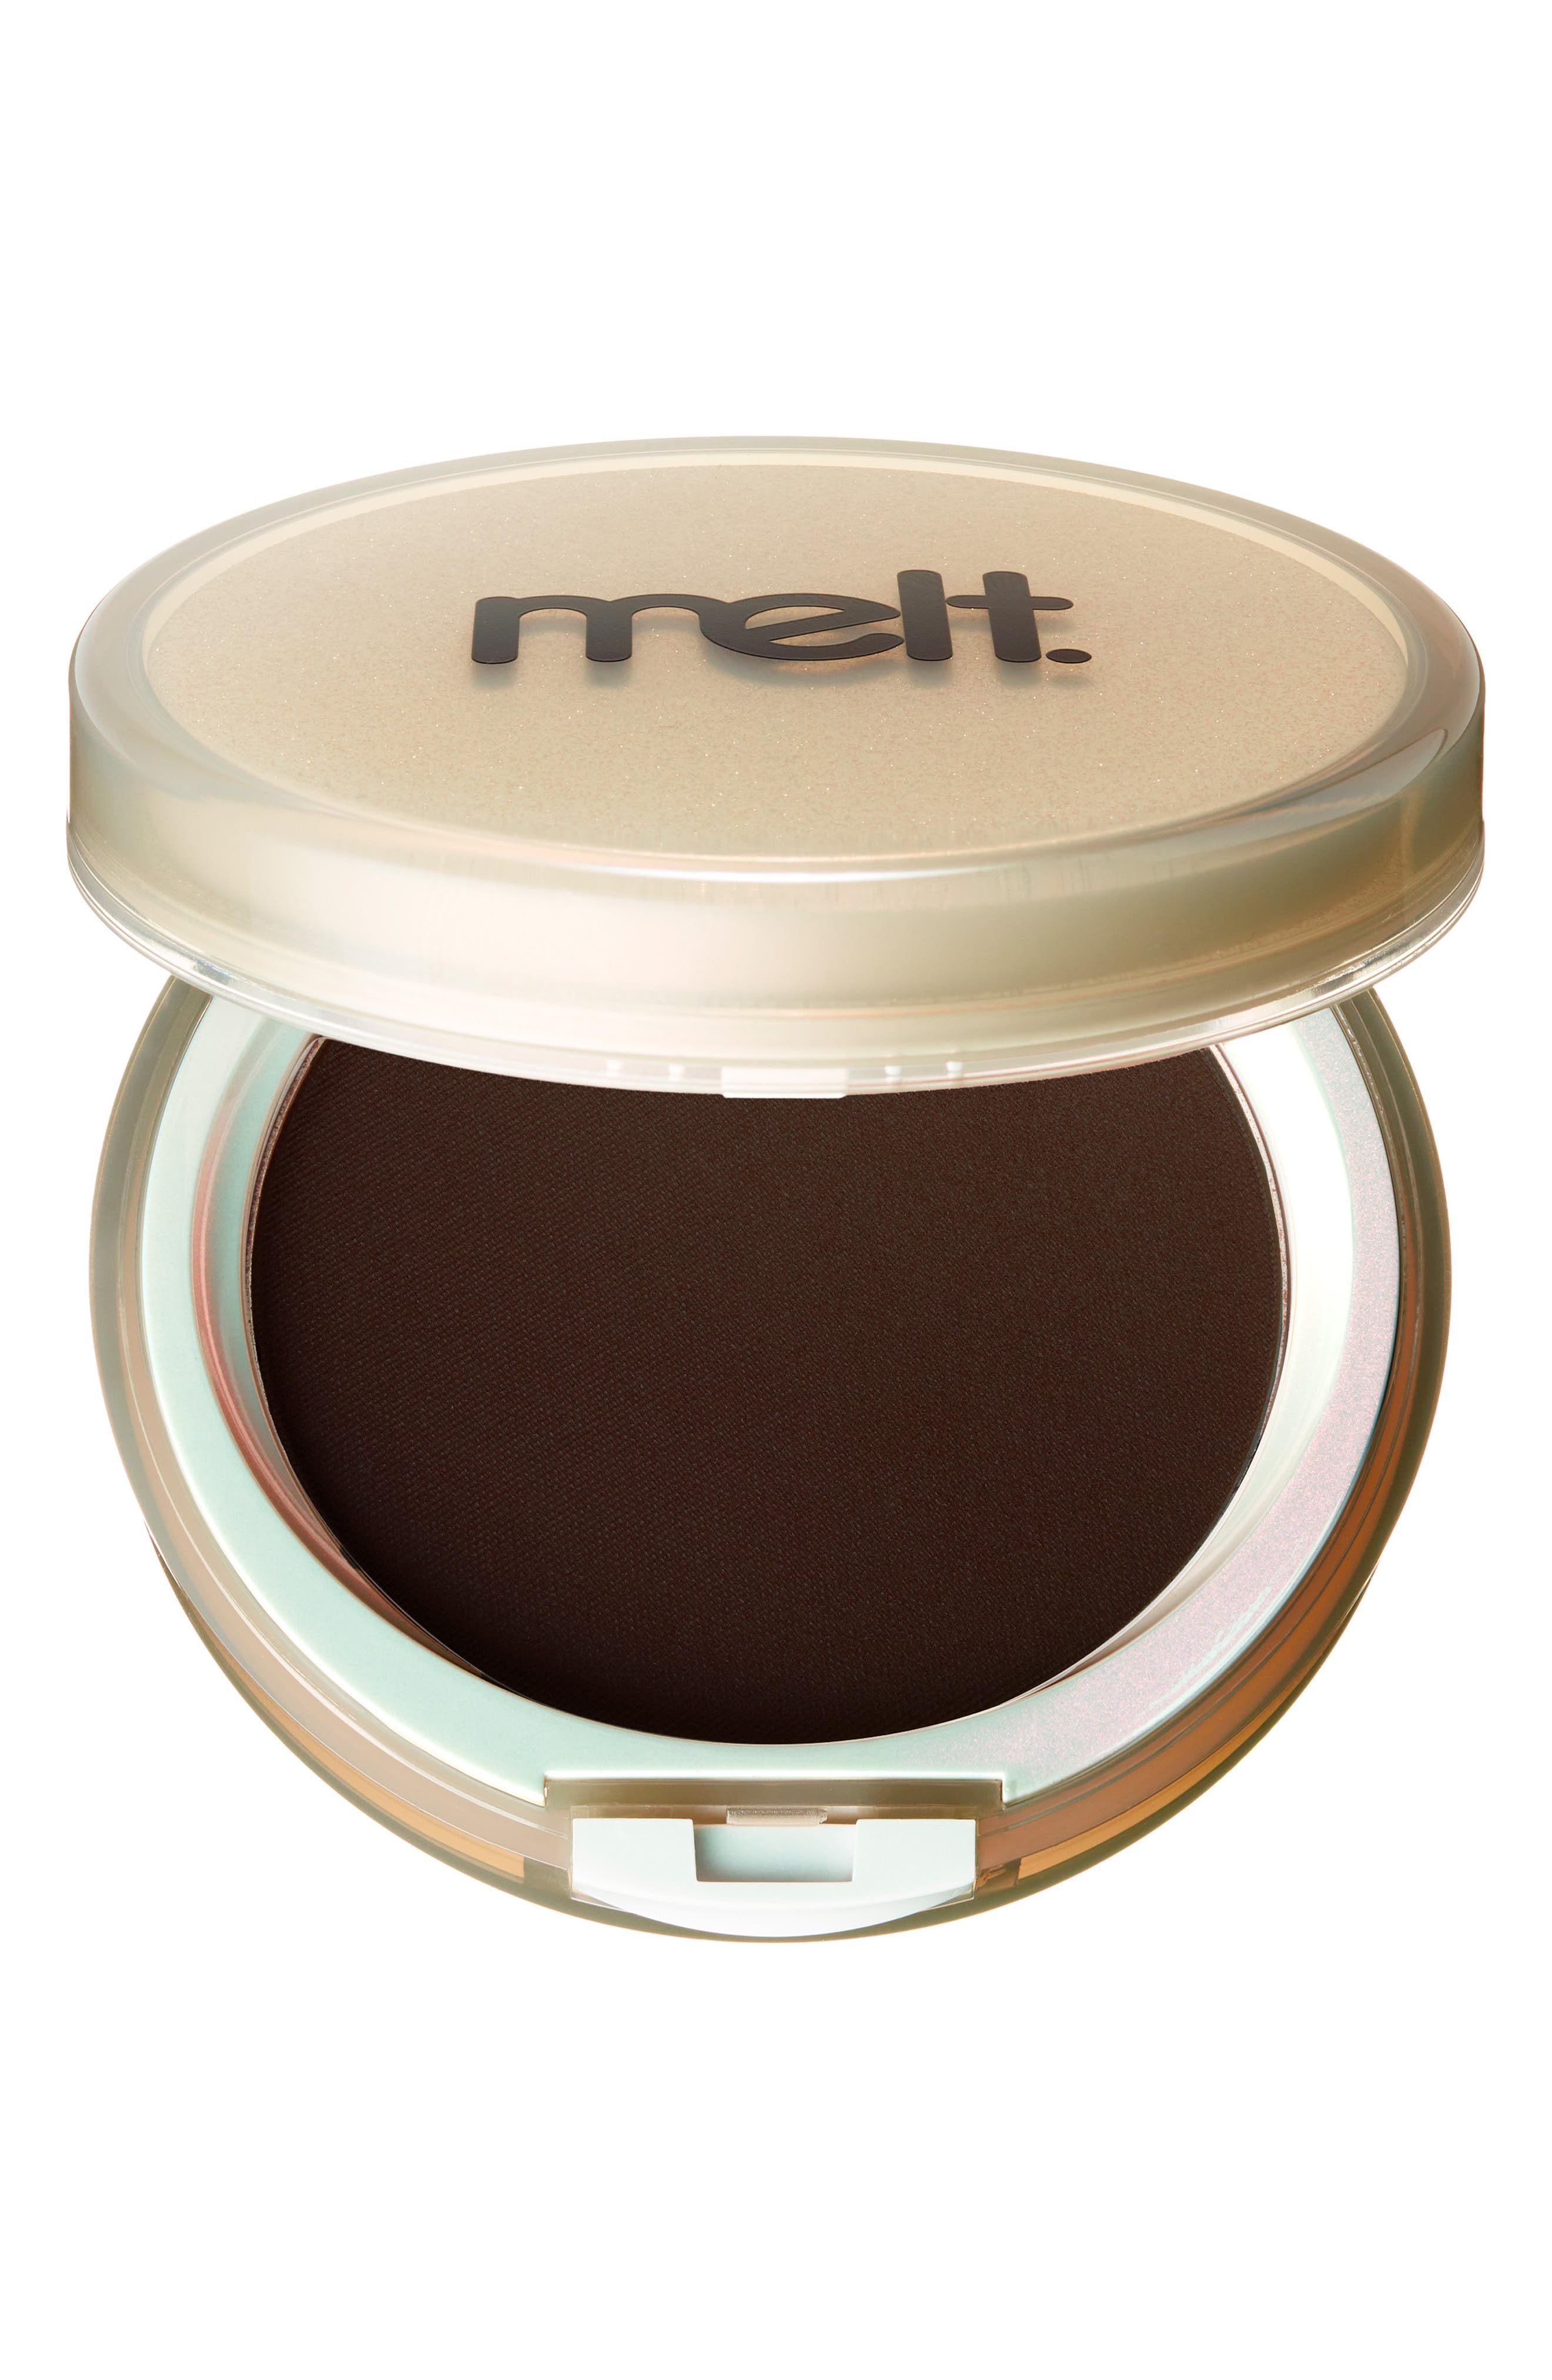 Melt Cosmetics Glazed Skin Sheer Finishing Powder in Deep | Smart Closet | Foundation